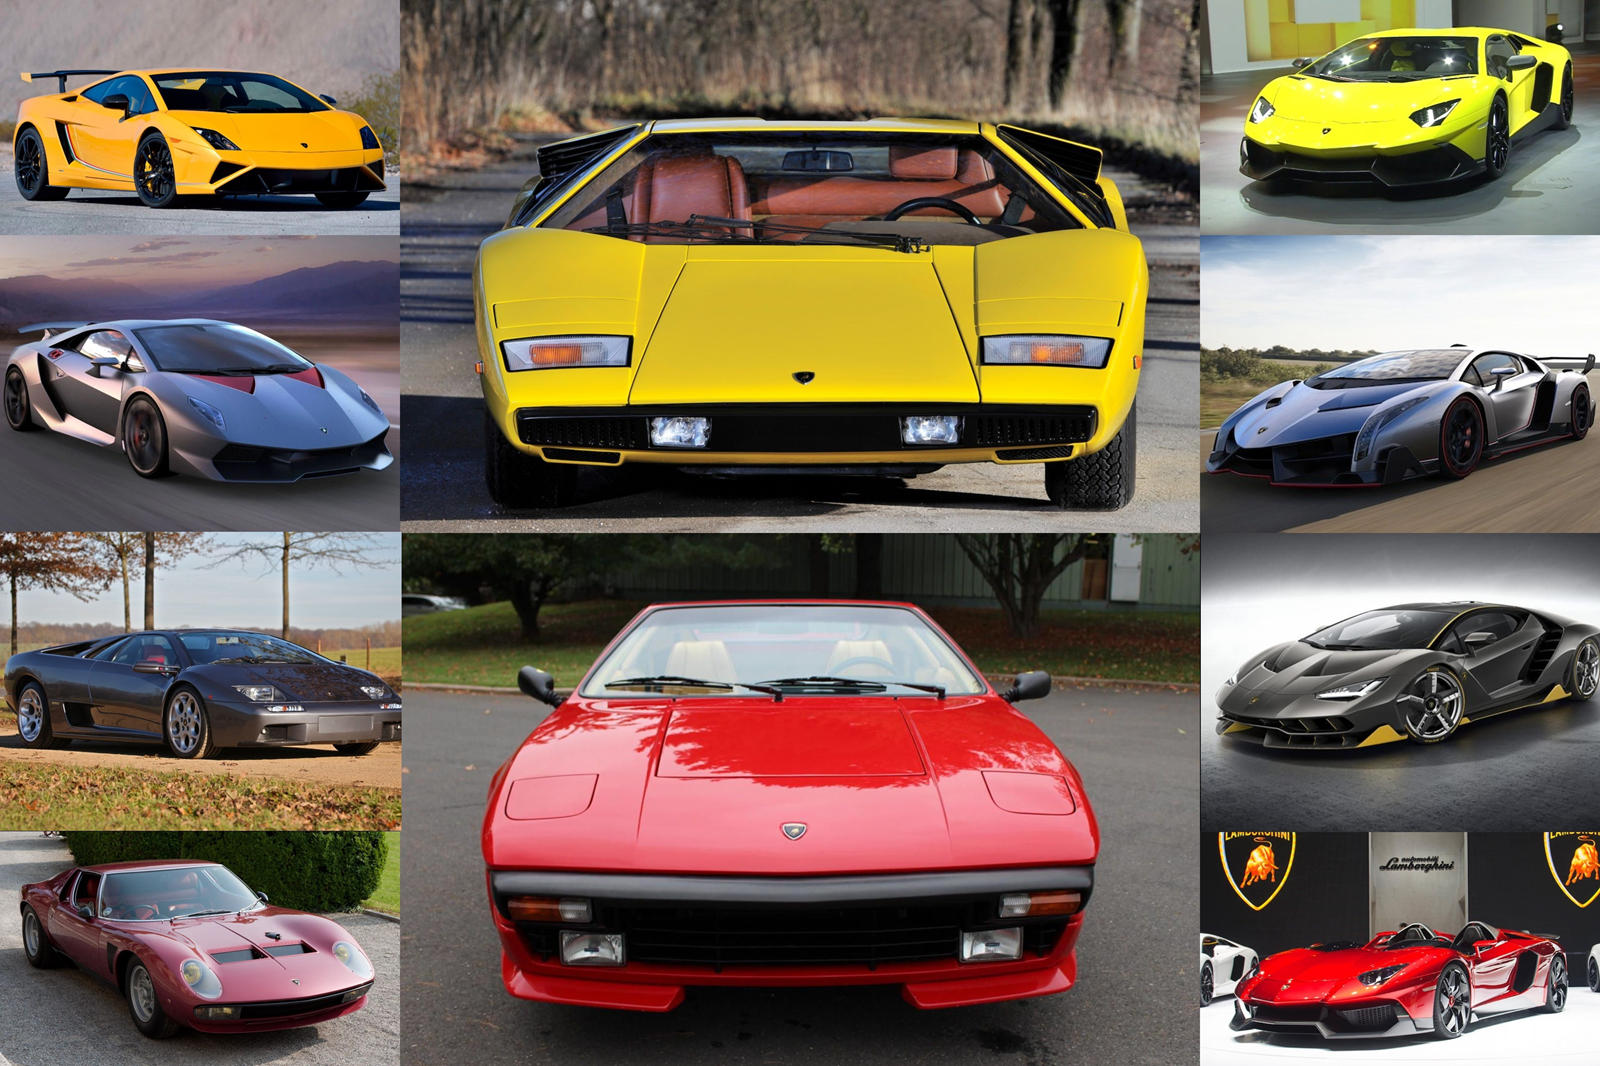 The Best Lamborghini Models for Collectors